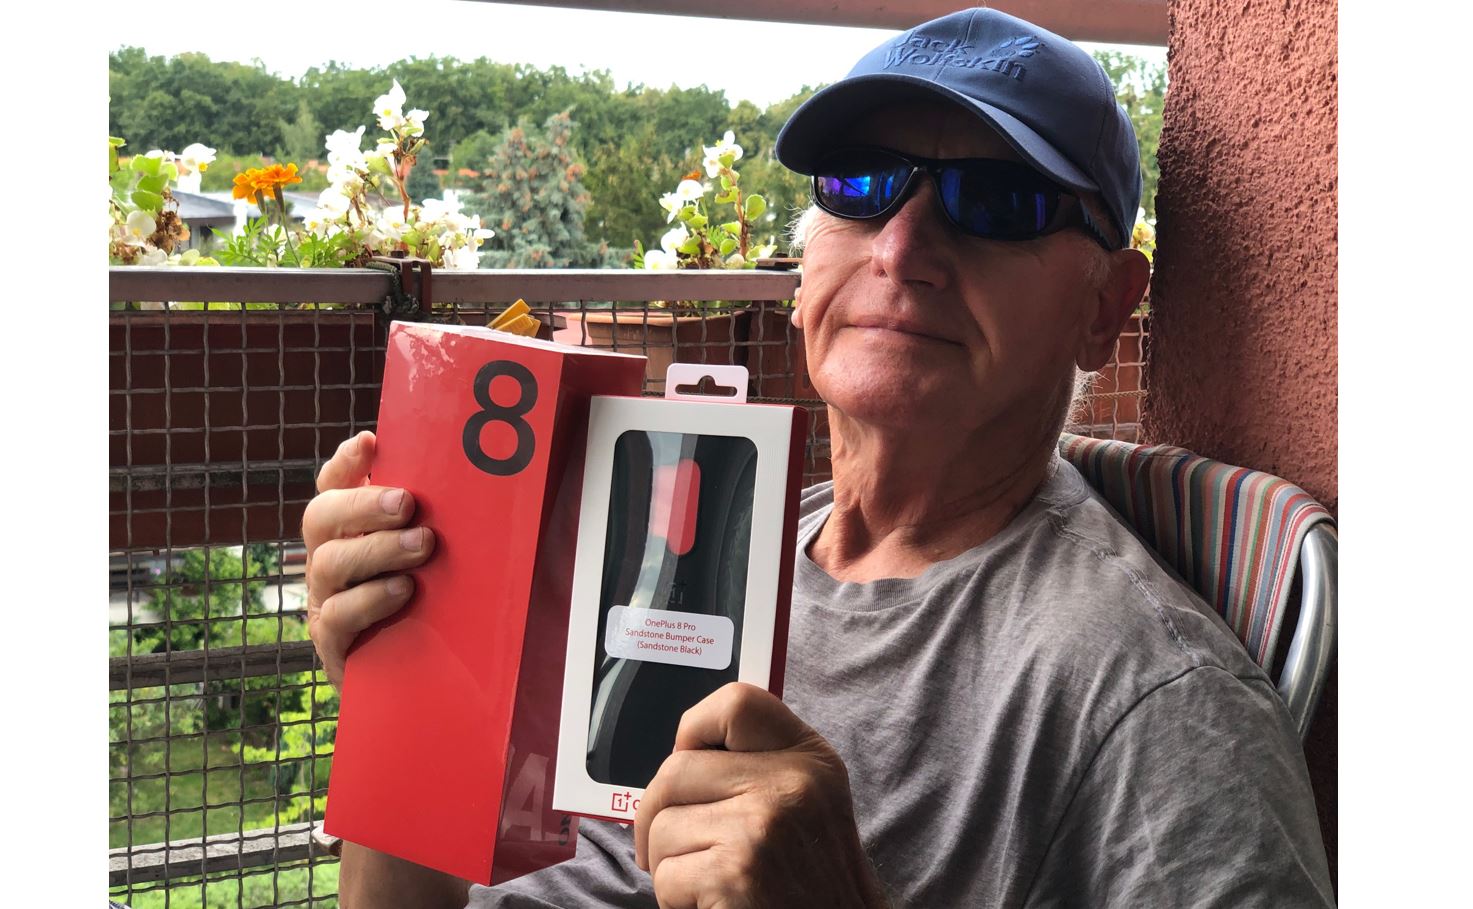 Mieczyslaw S Giveaway Winner with OnePlus 8 Pro